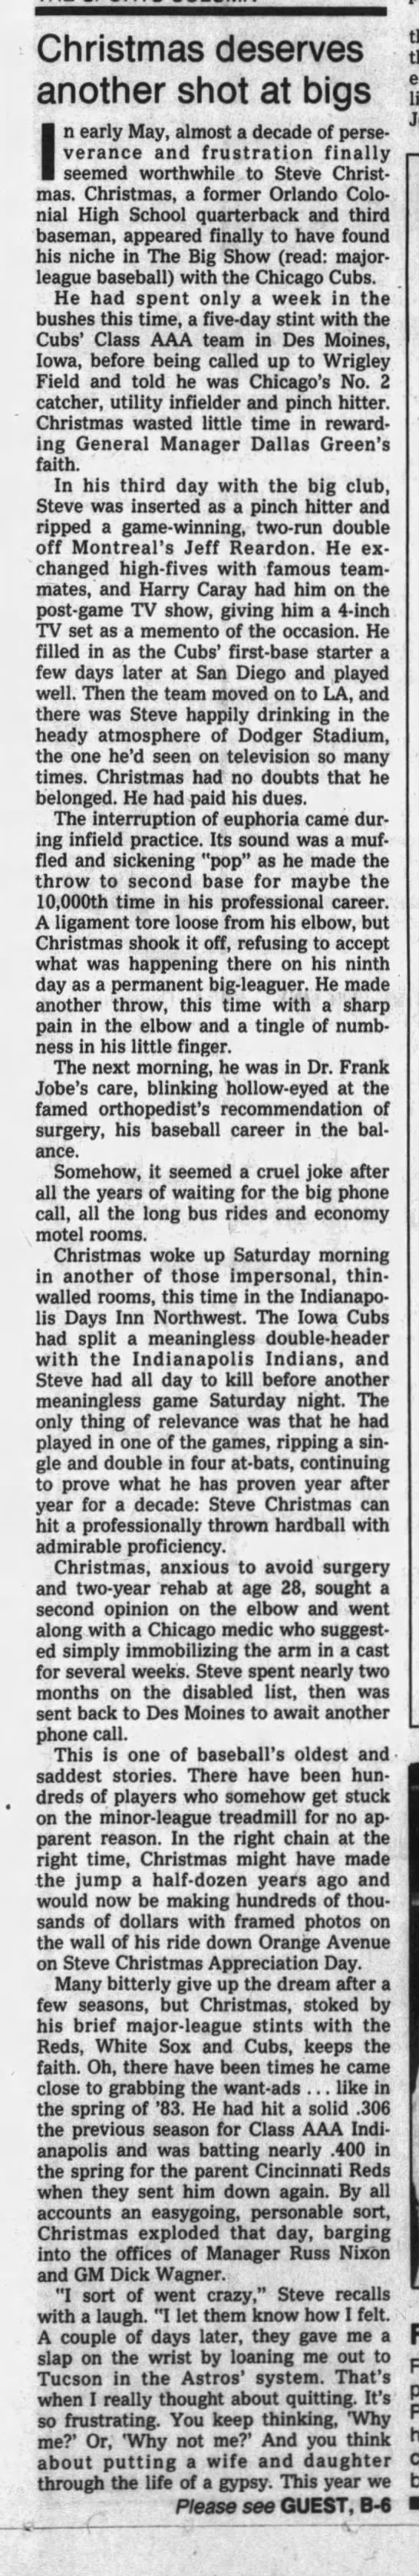 The Orlando Sentinel August 3 1986 - 